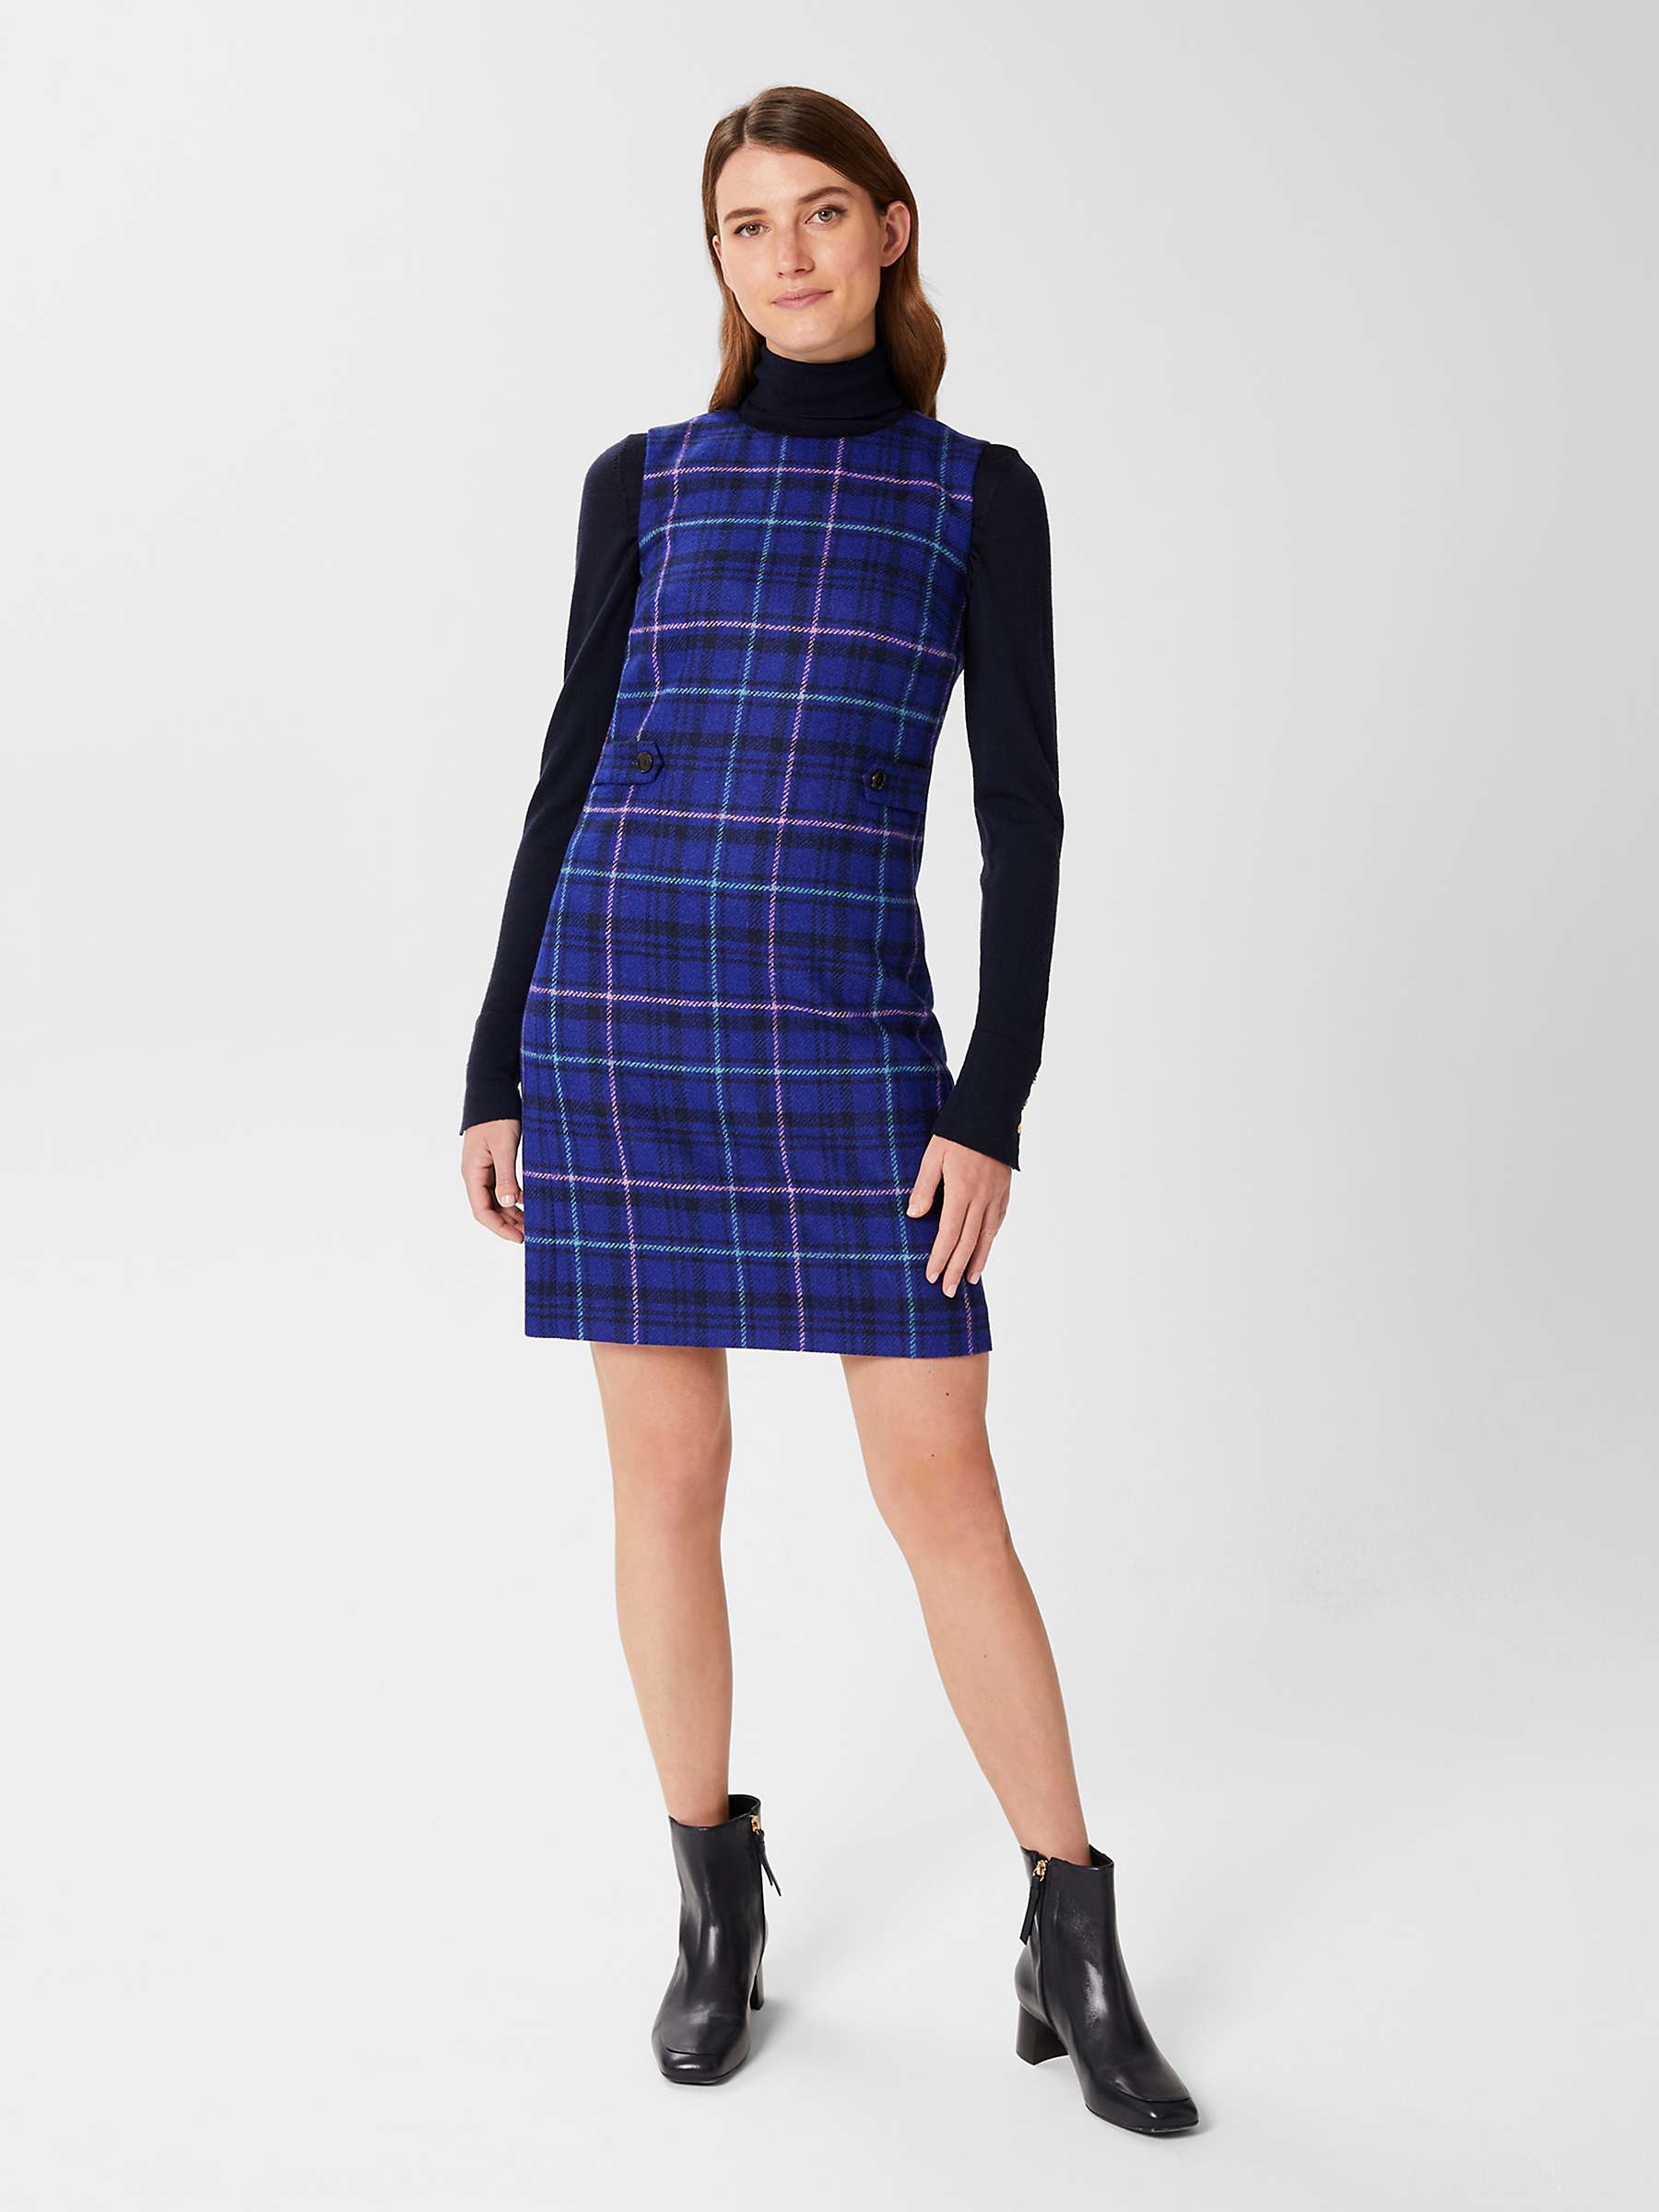 Hobbs Emberly Check Wool Mini Dress, Cobalt/Multi at John Lewis & Partners